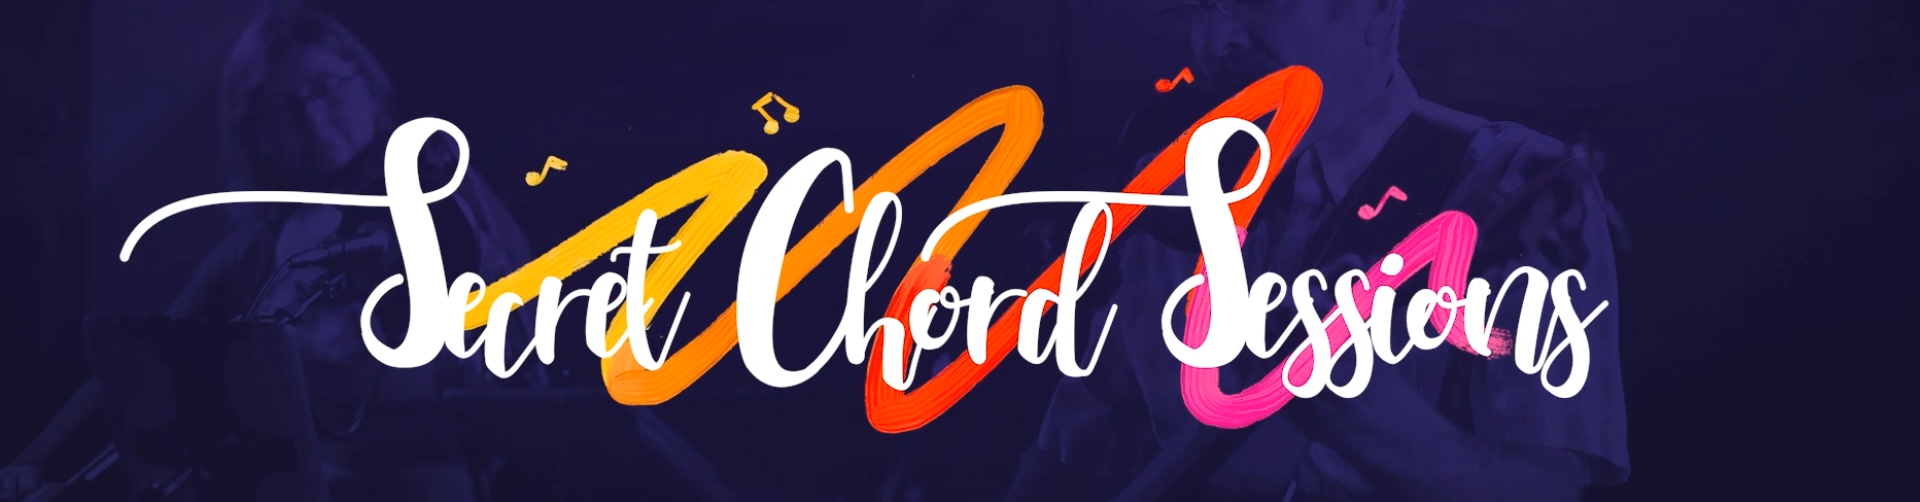 The Secret Chord Sessions logo